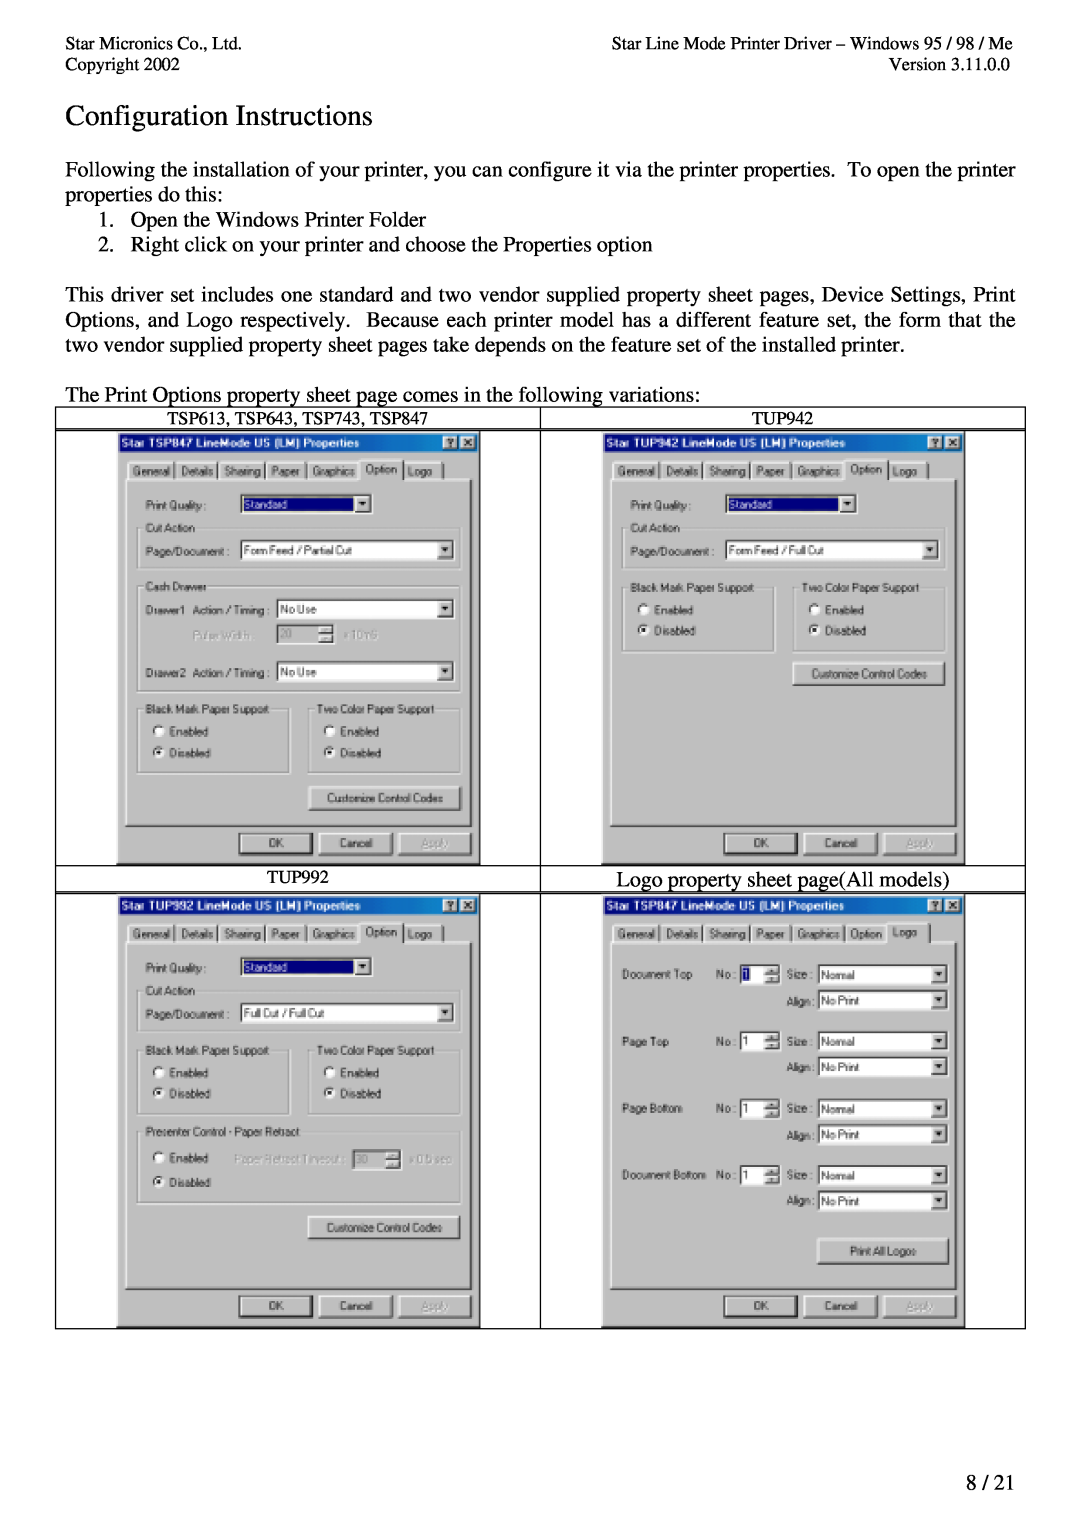 Star Micronics TUP992 user manual Configuration Instructions 